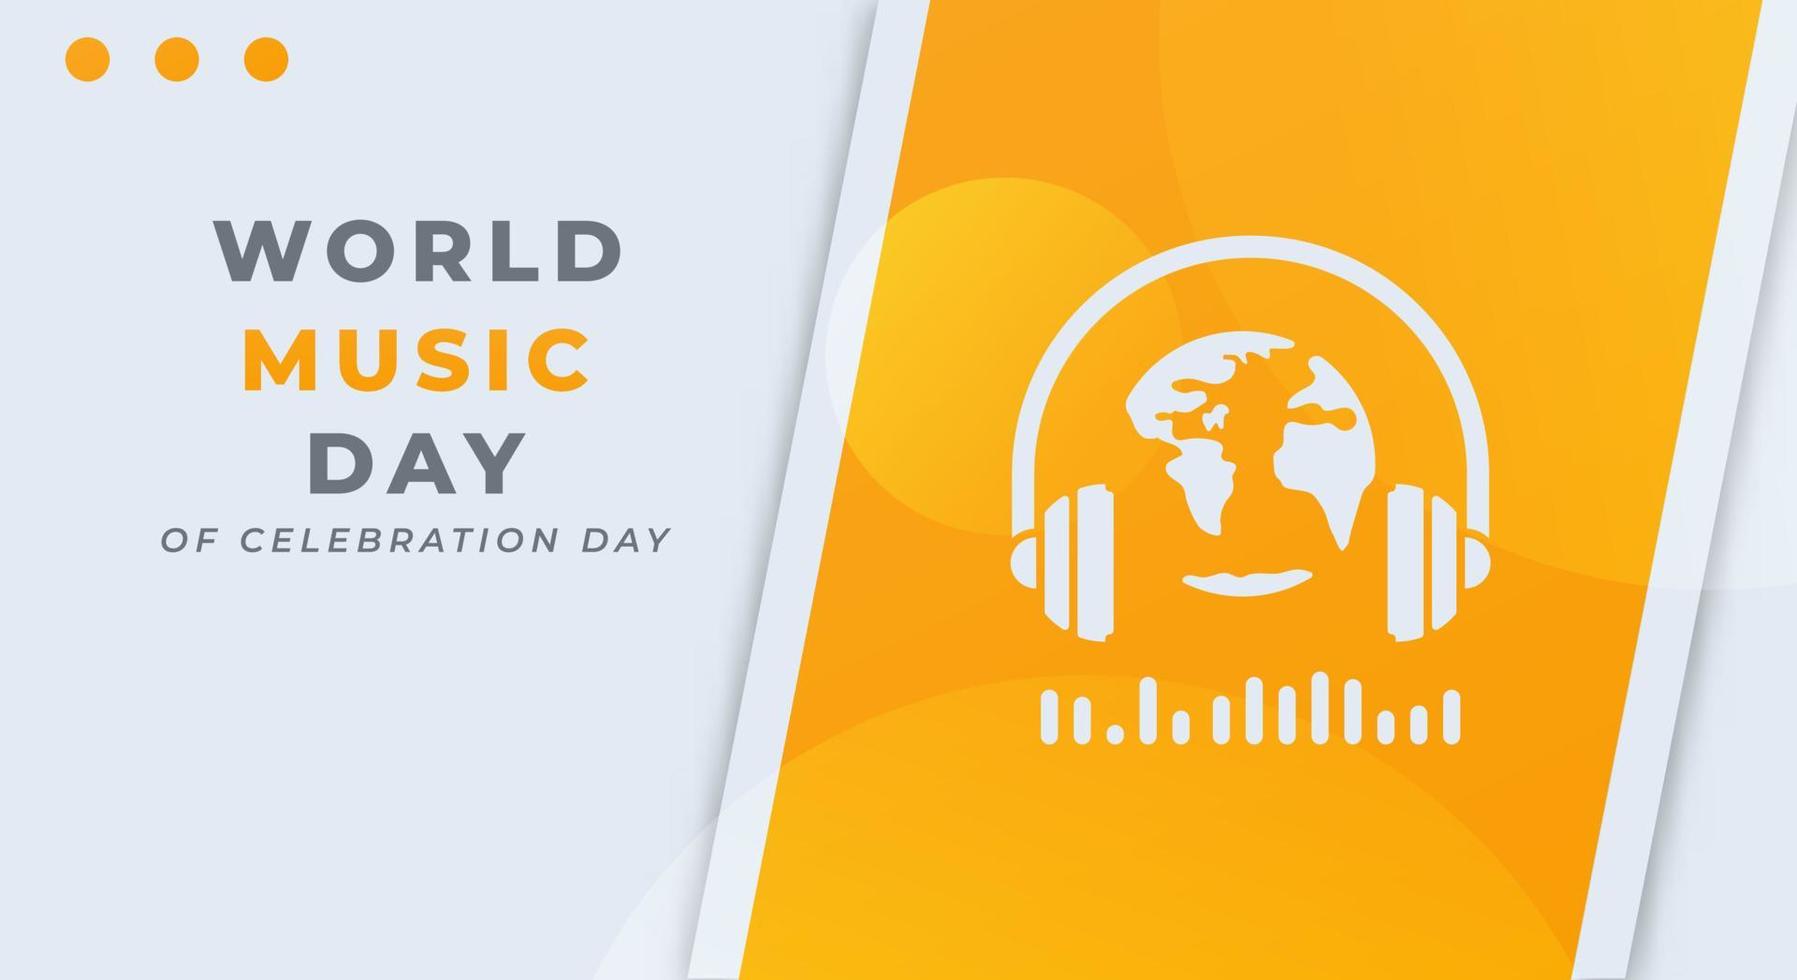 World Music Day Celebration Vector Design Illustration for Background, Poster, Banner, Advertising, Greeting Card